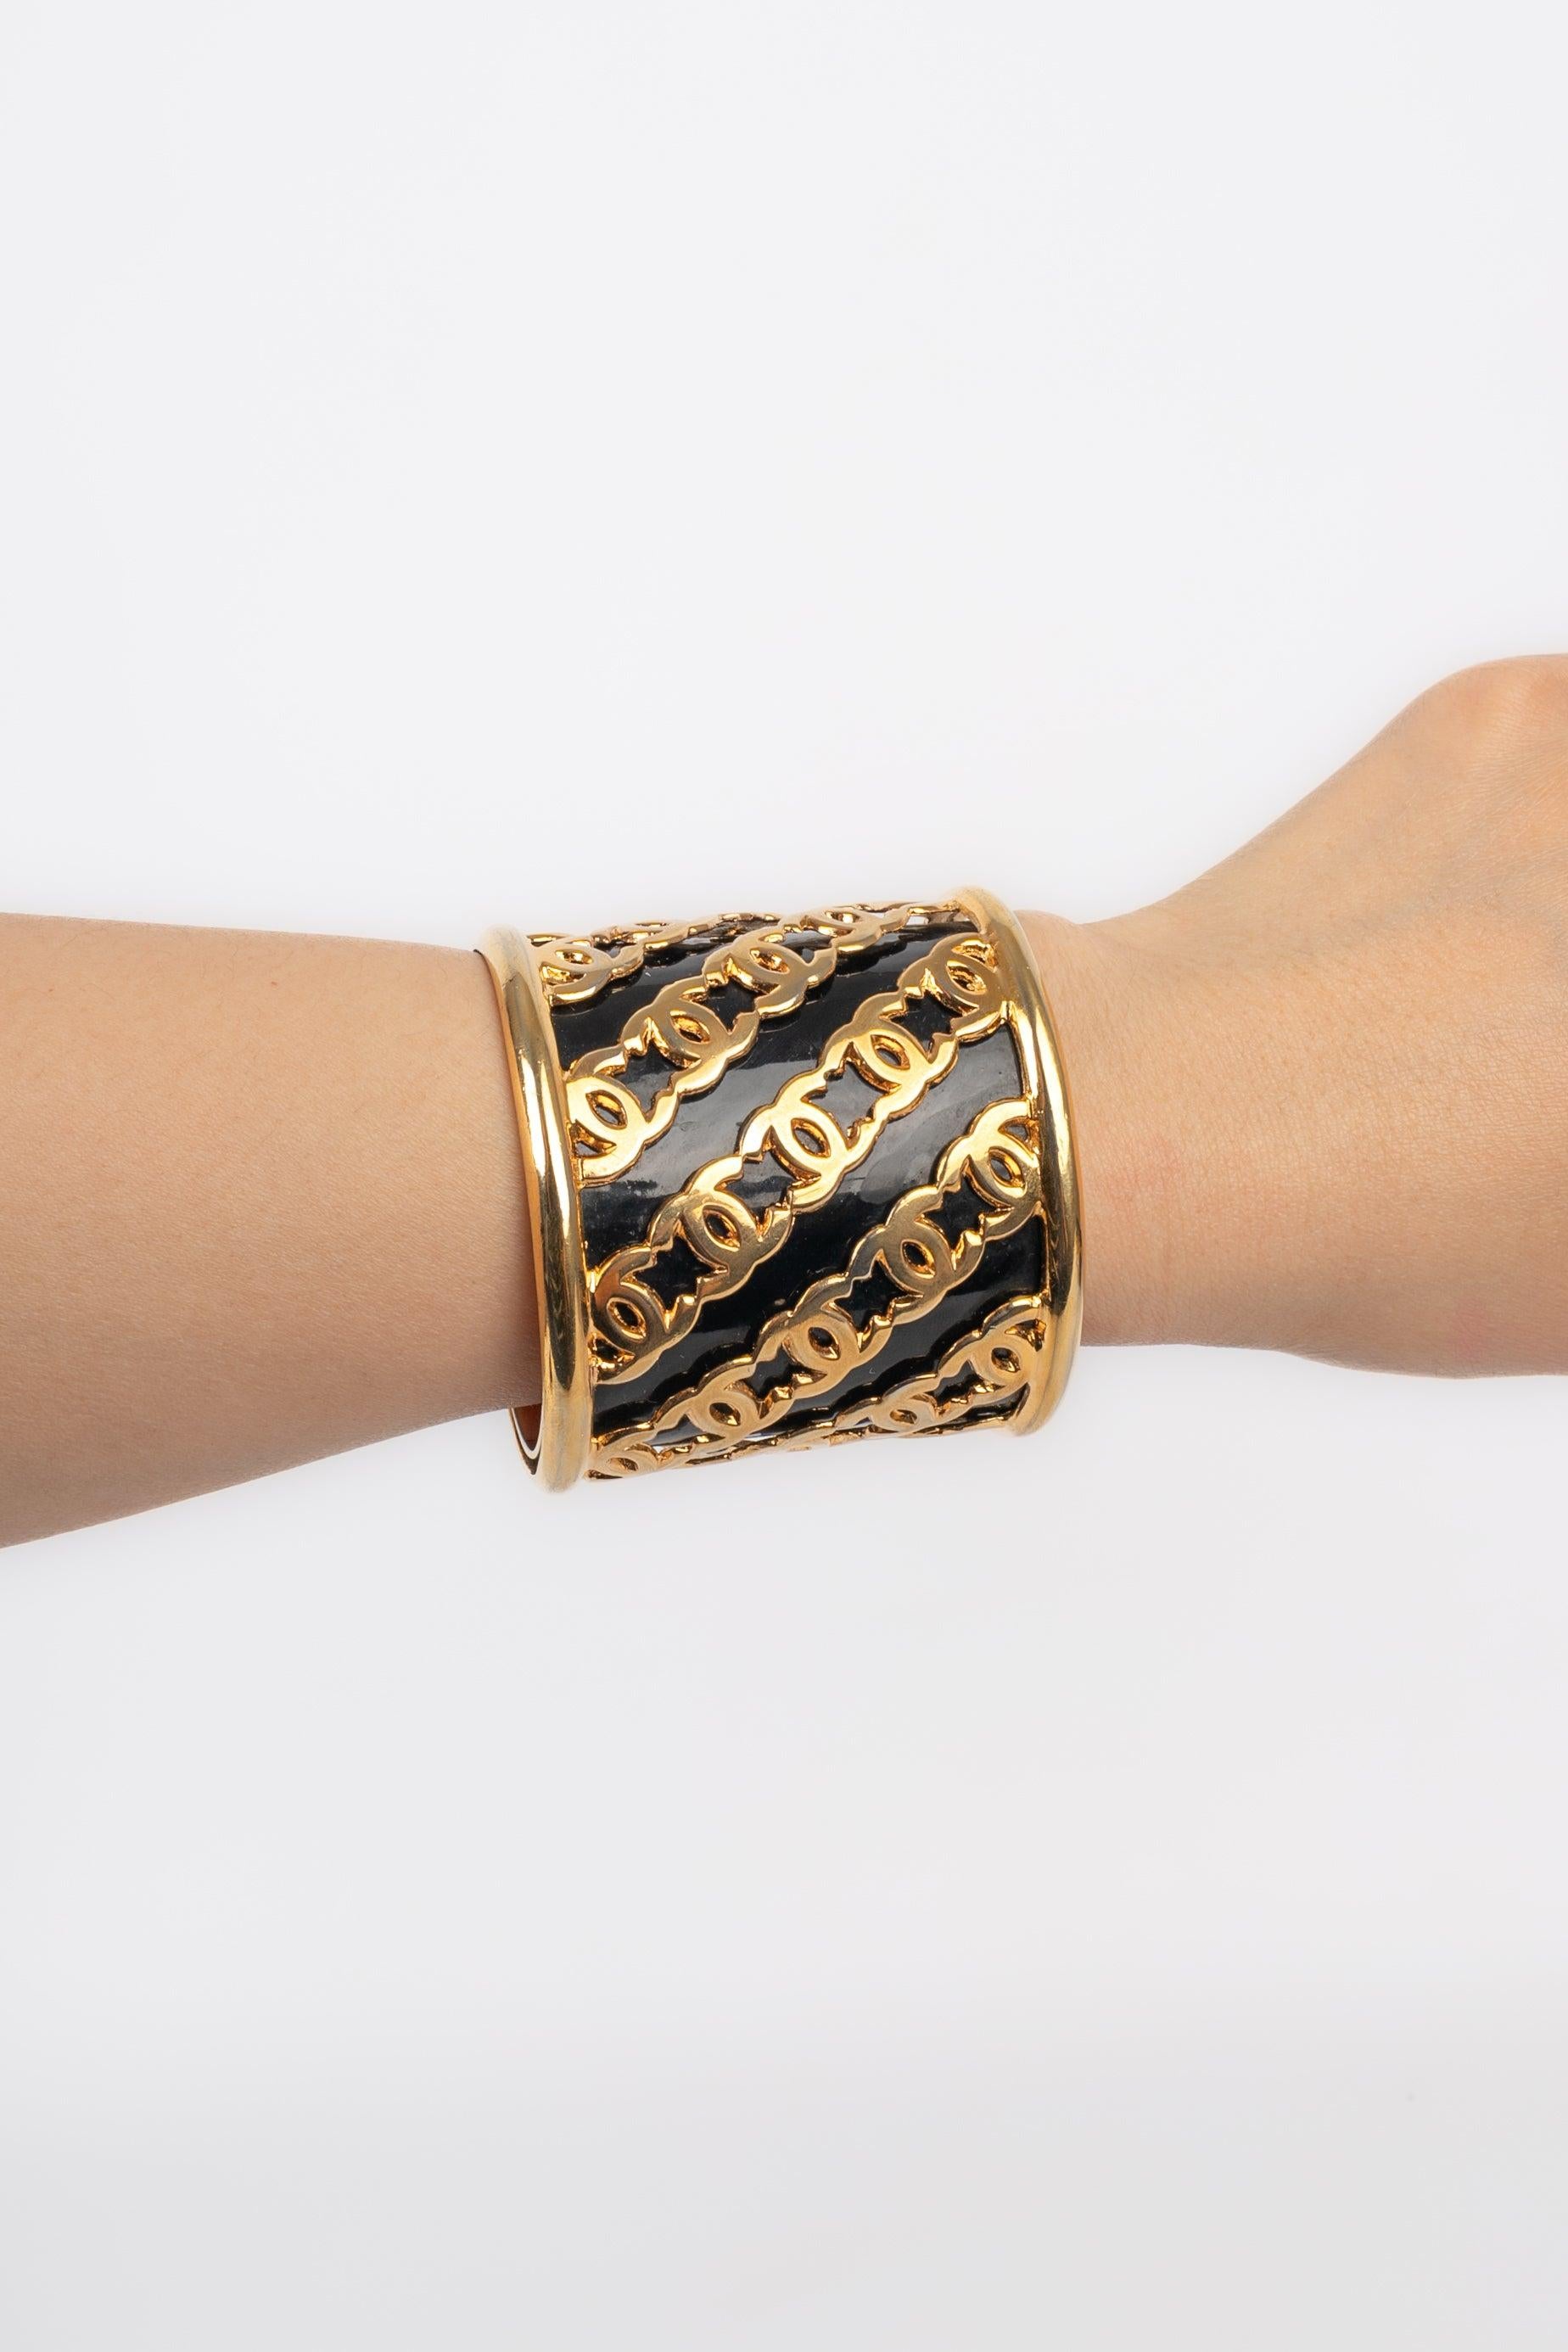 Chanel Golden Metal Cuff Bracelet Enameled with Black In Excellent Condition For Sale In SAINT-OUEN-SUR-SEINE, FR